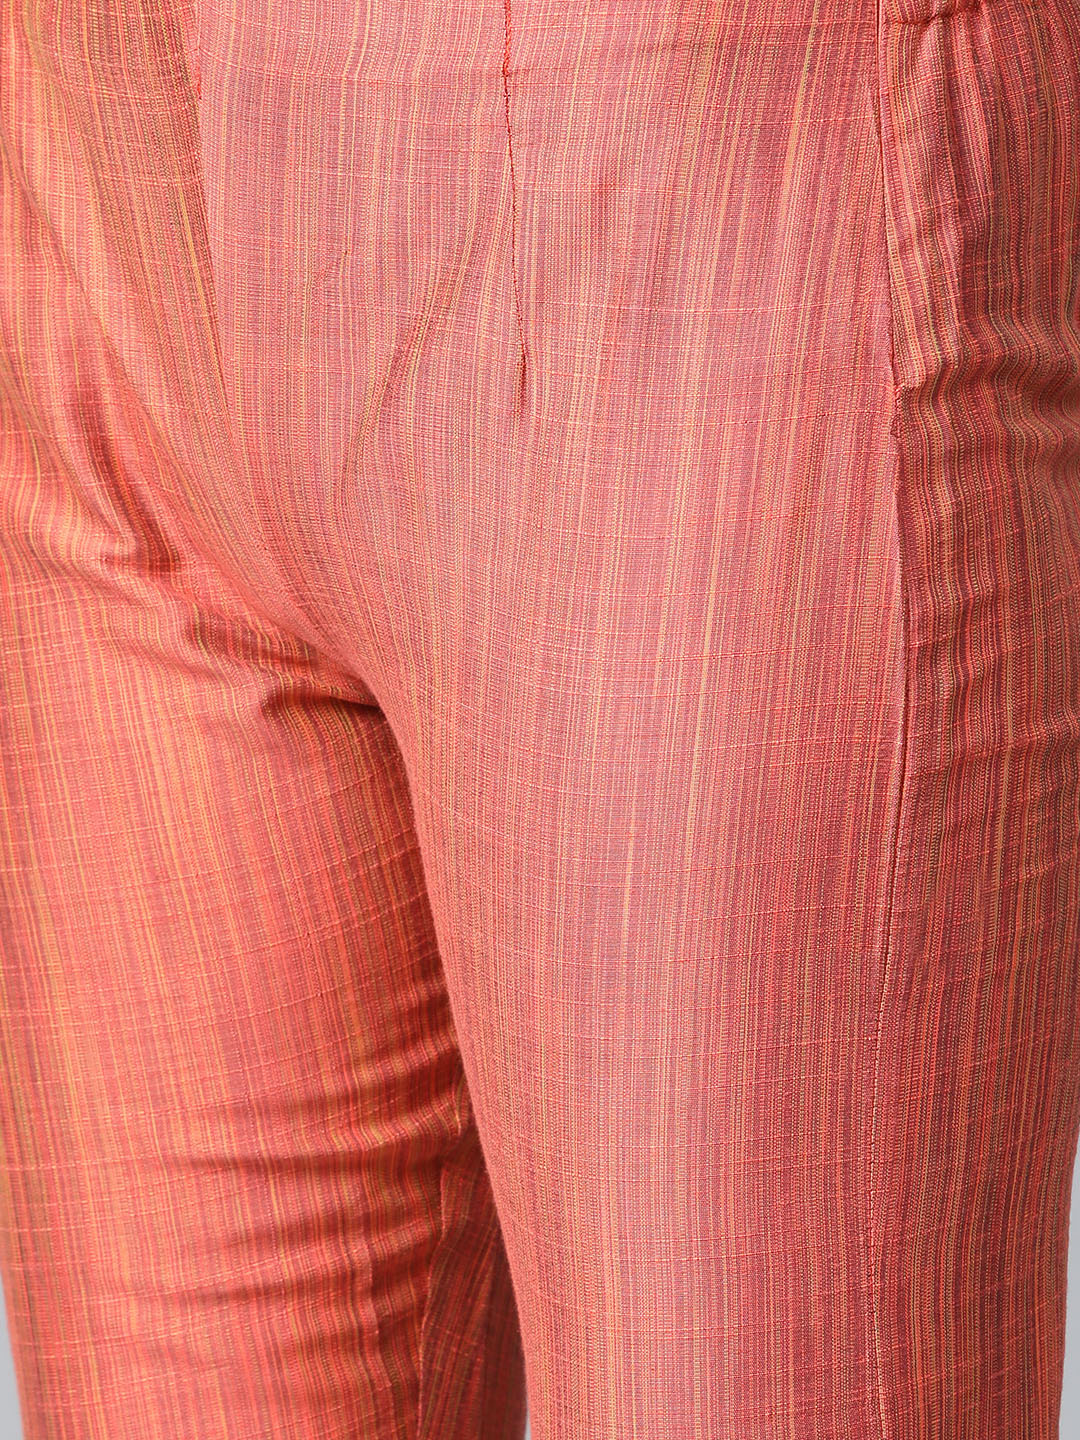 Jompers Women Rust Orange & Beige Self-Striped Kurta with Trousers & Dupatta